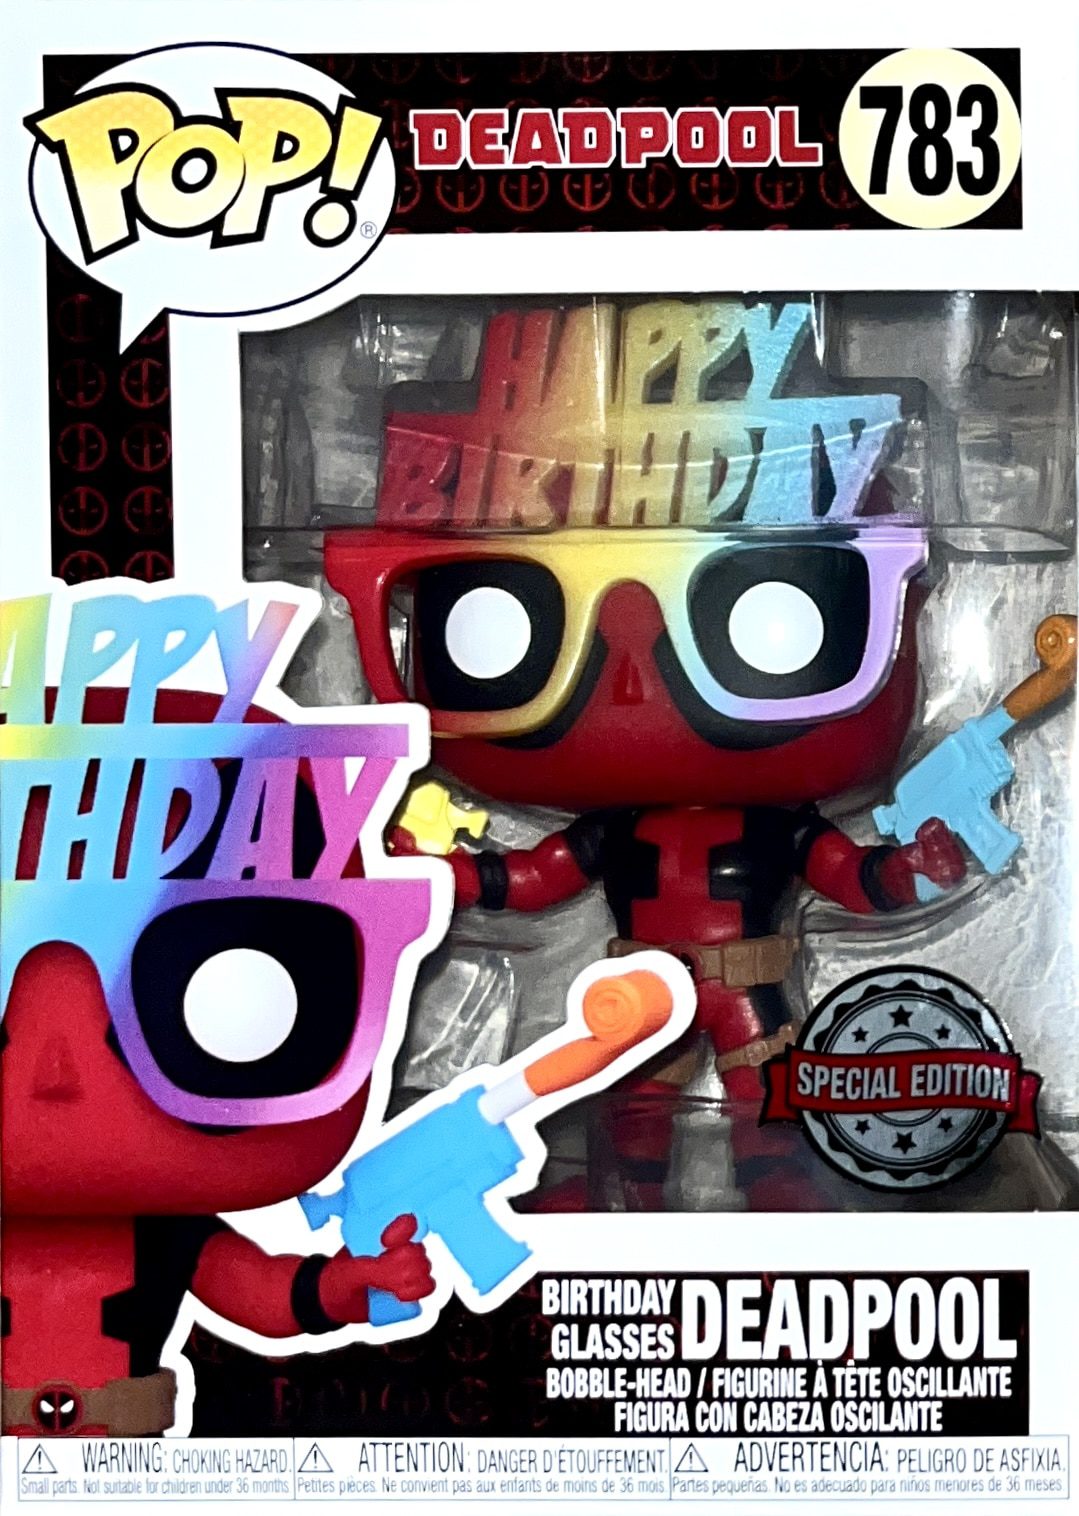 Implacable Generacion igualdad Funko Deadpool Birthday Glasses - Fridafunko Tienda Funko Pop!